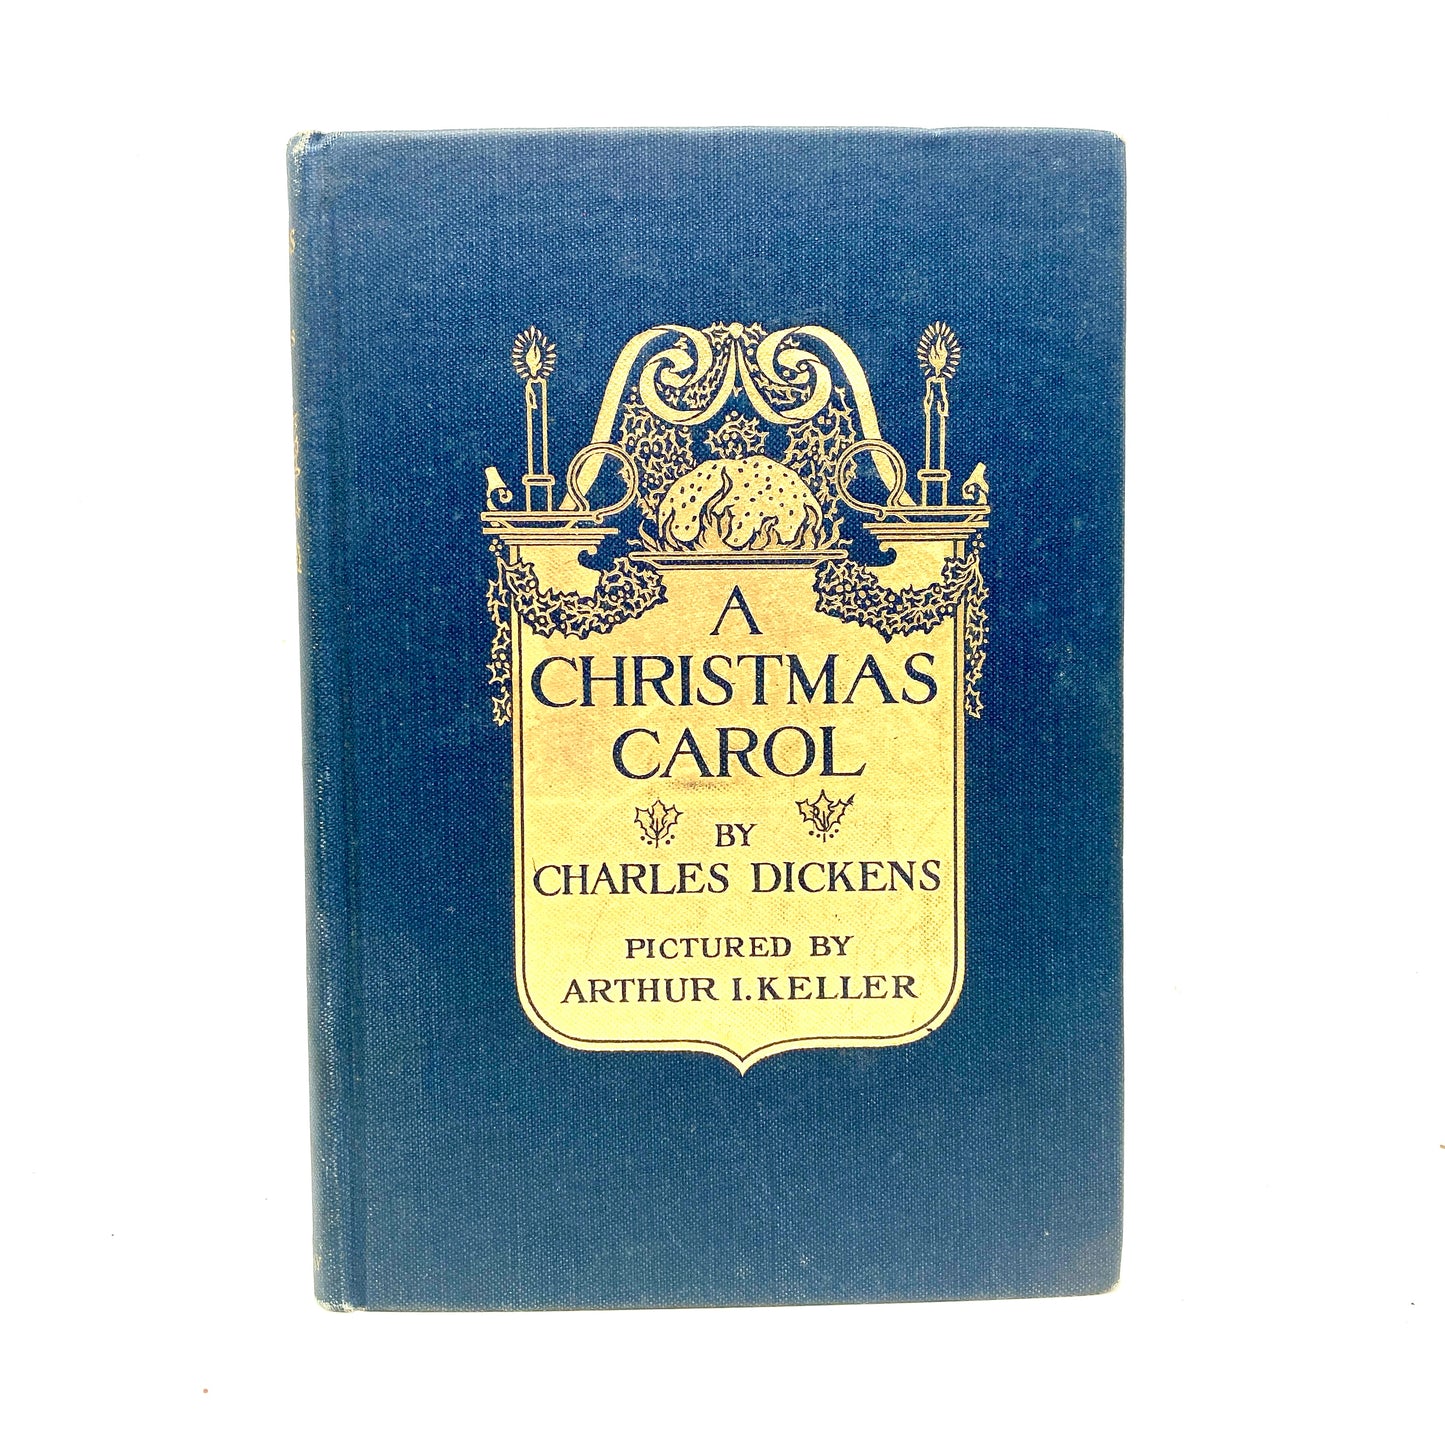 DICKENS, Charles "A Christmas Carol" [David McKay, 1914] Color Illustrations